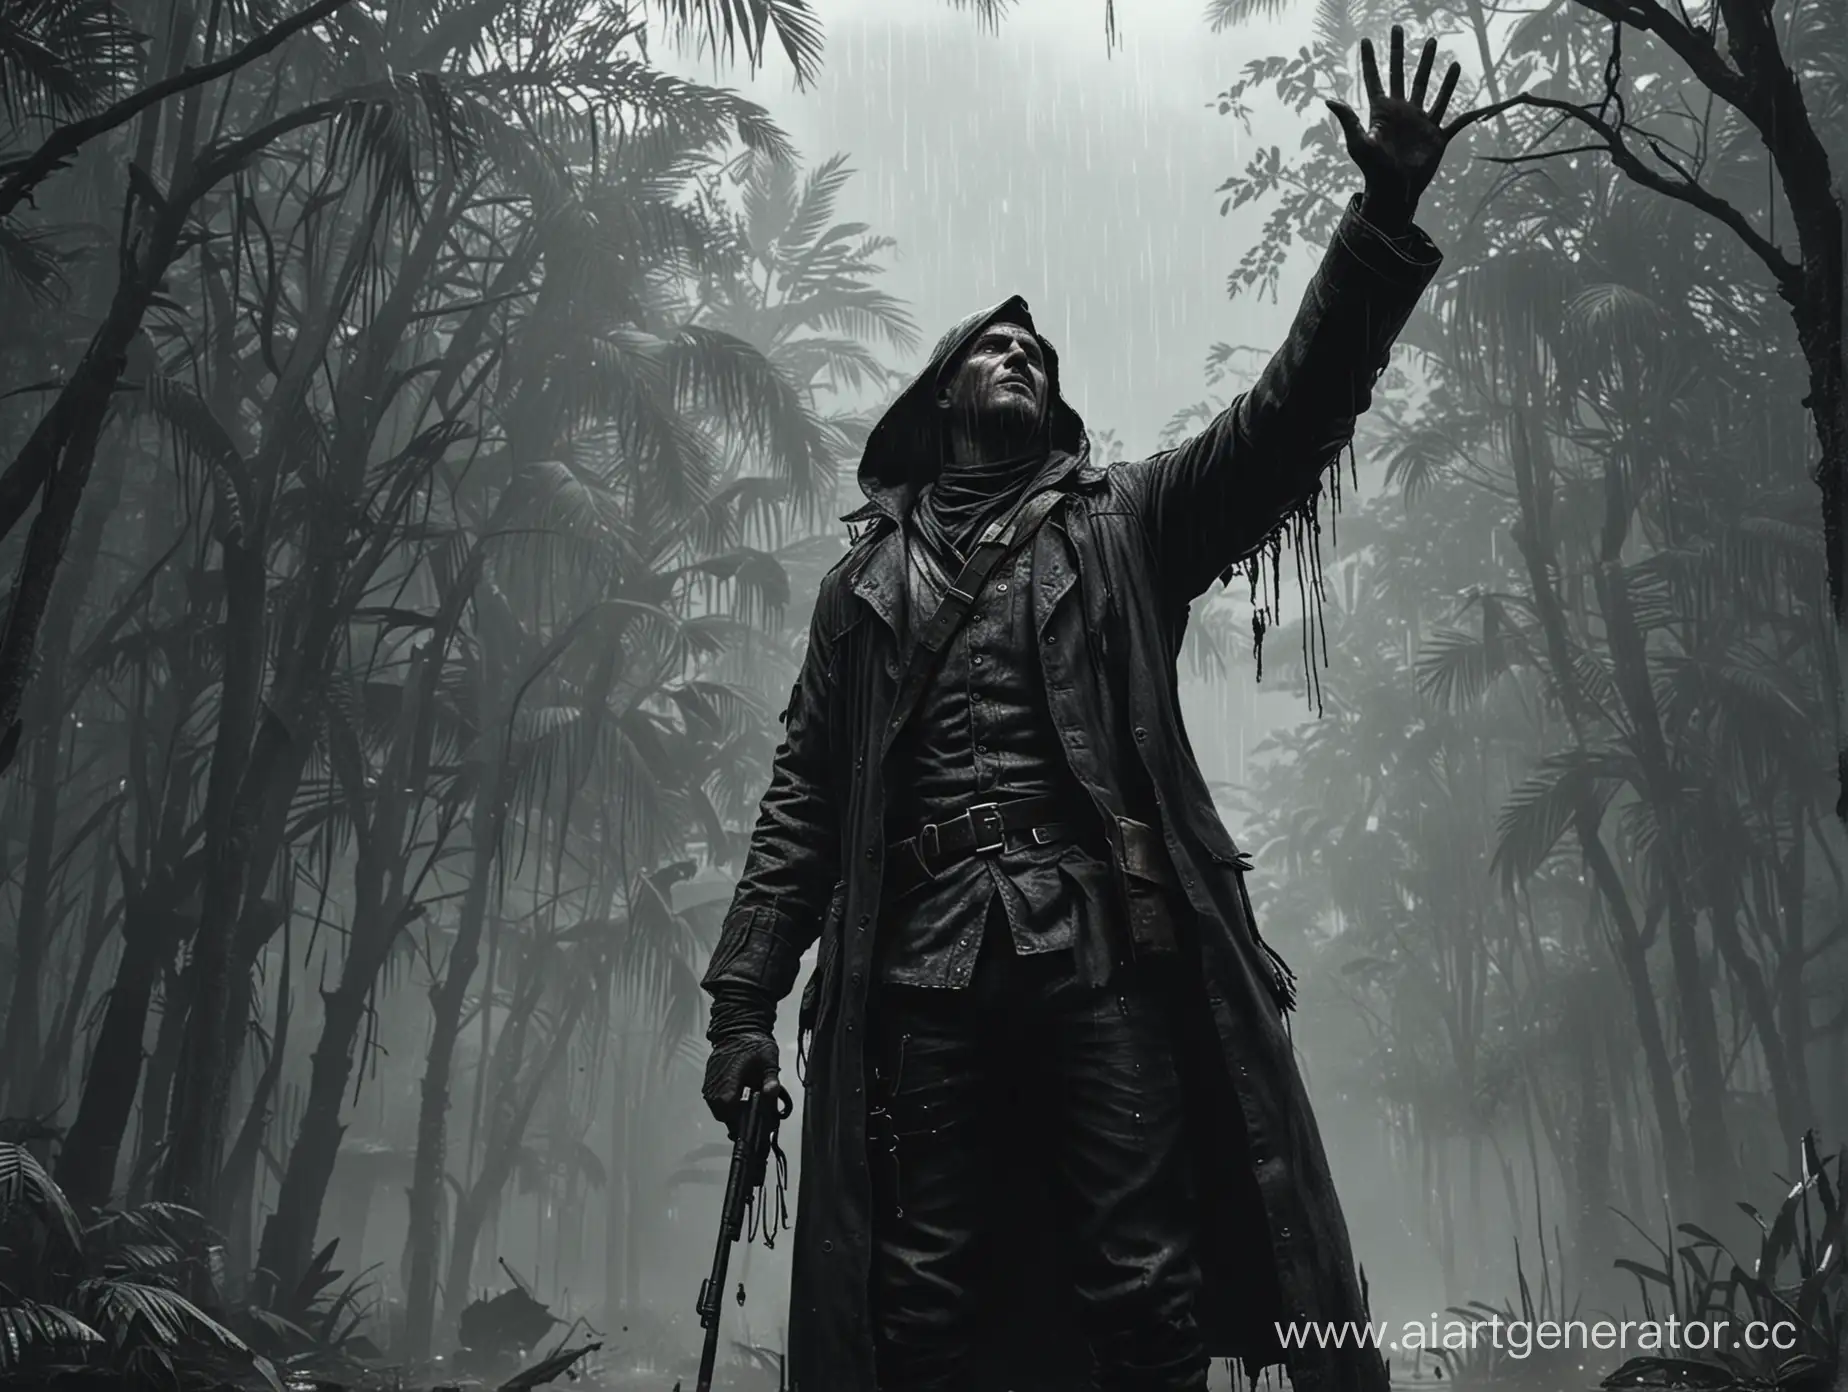 Mourning-Hunter-in-Rain-Hooded-Figure-Raises-Hand-Sideways